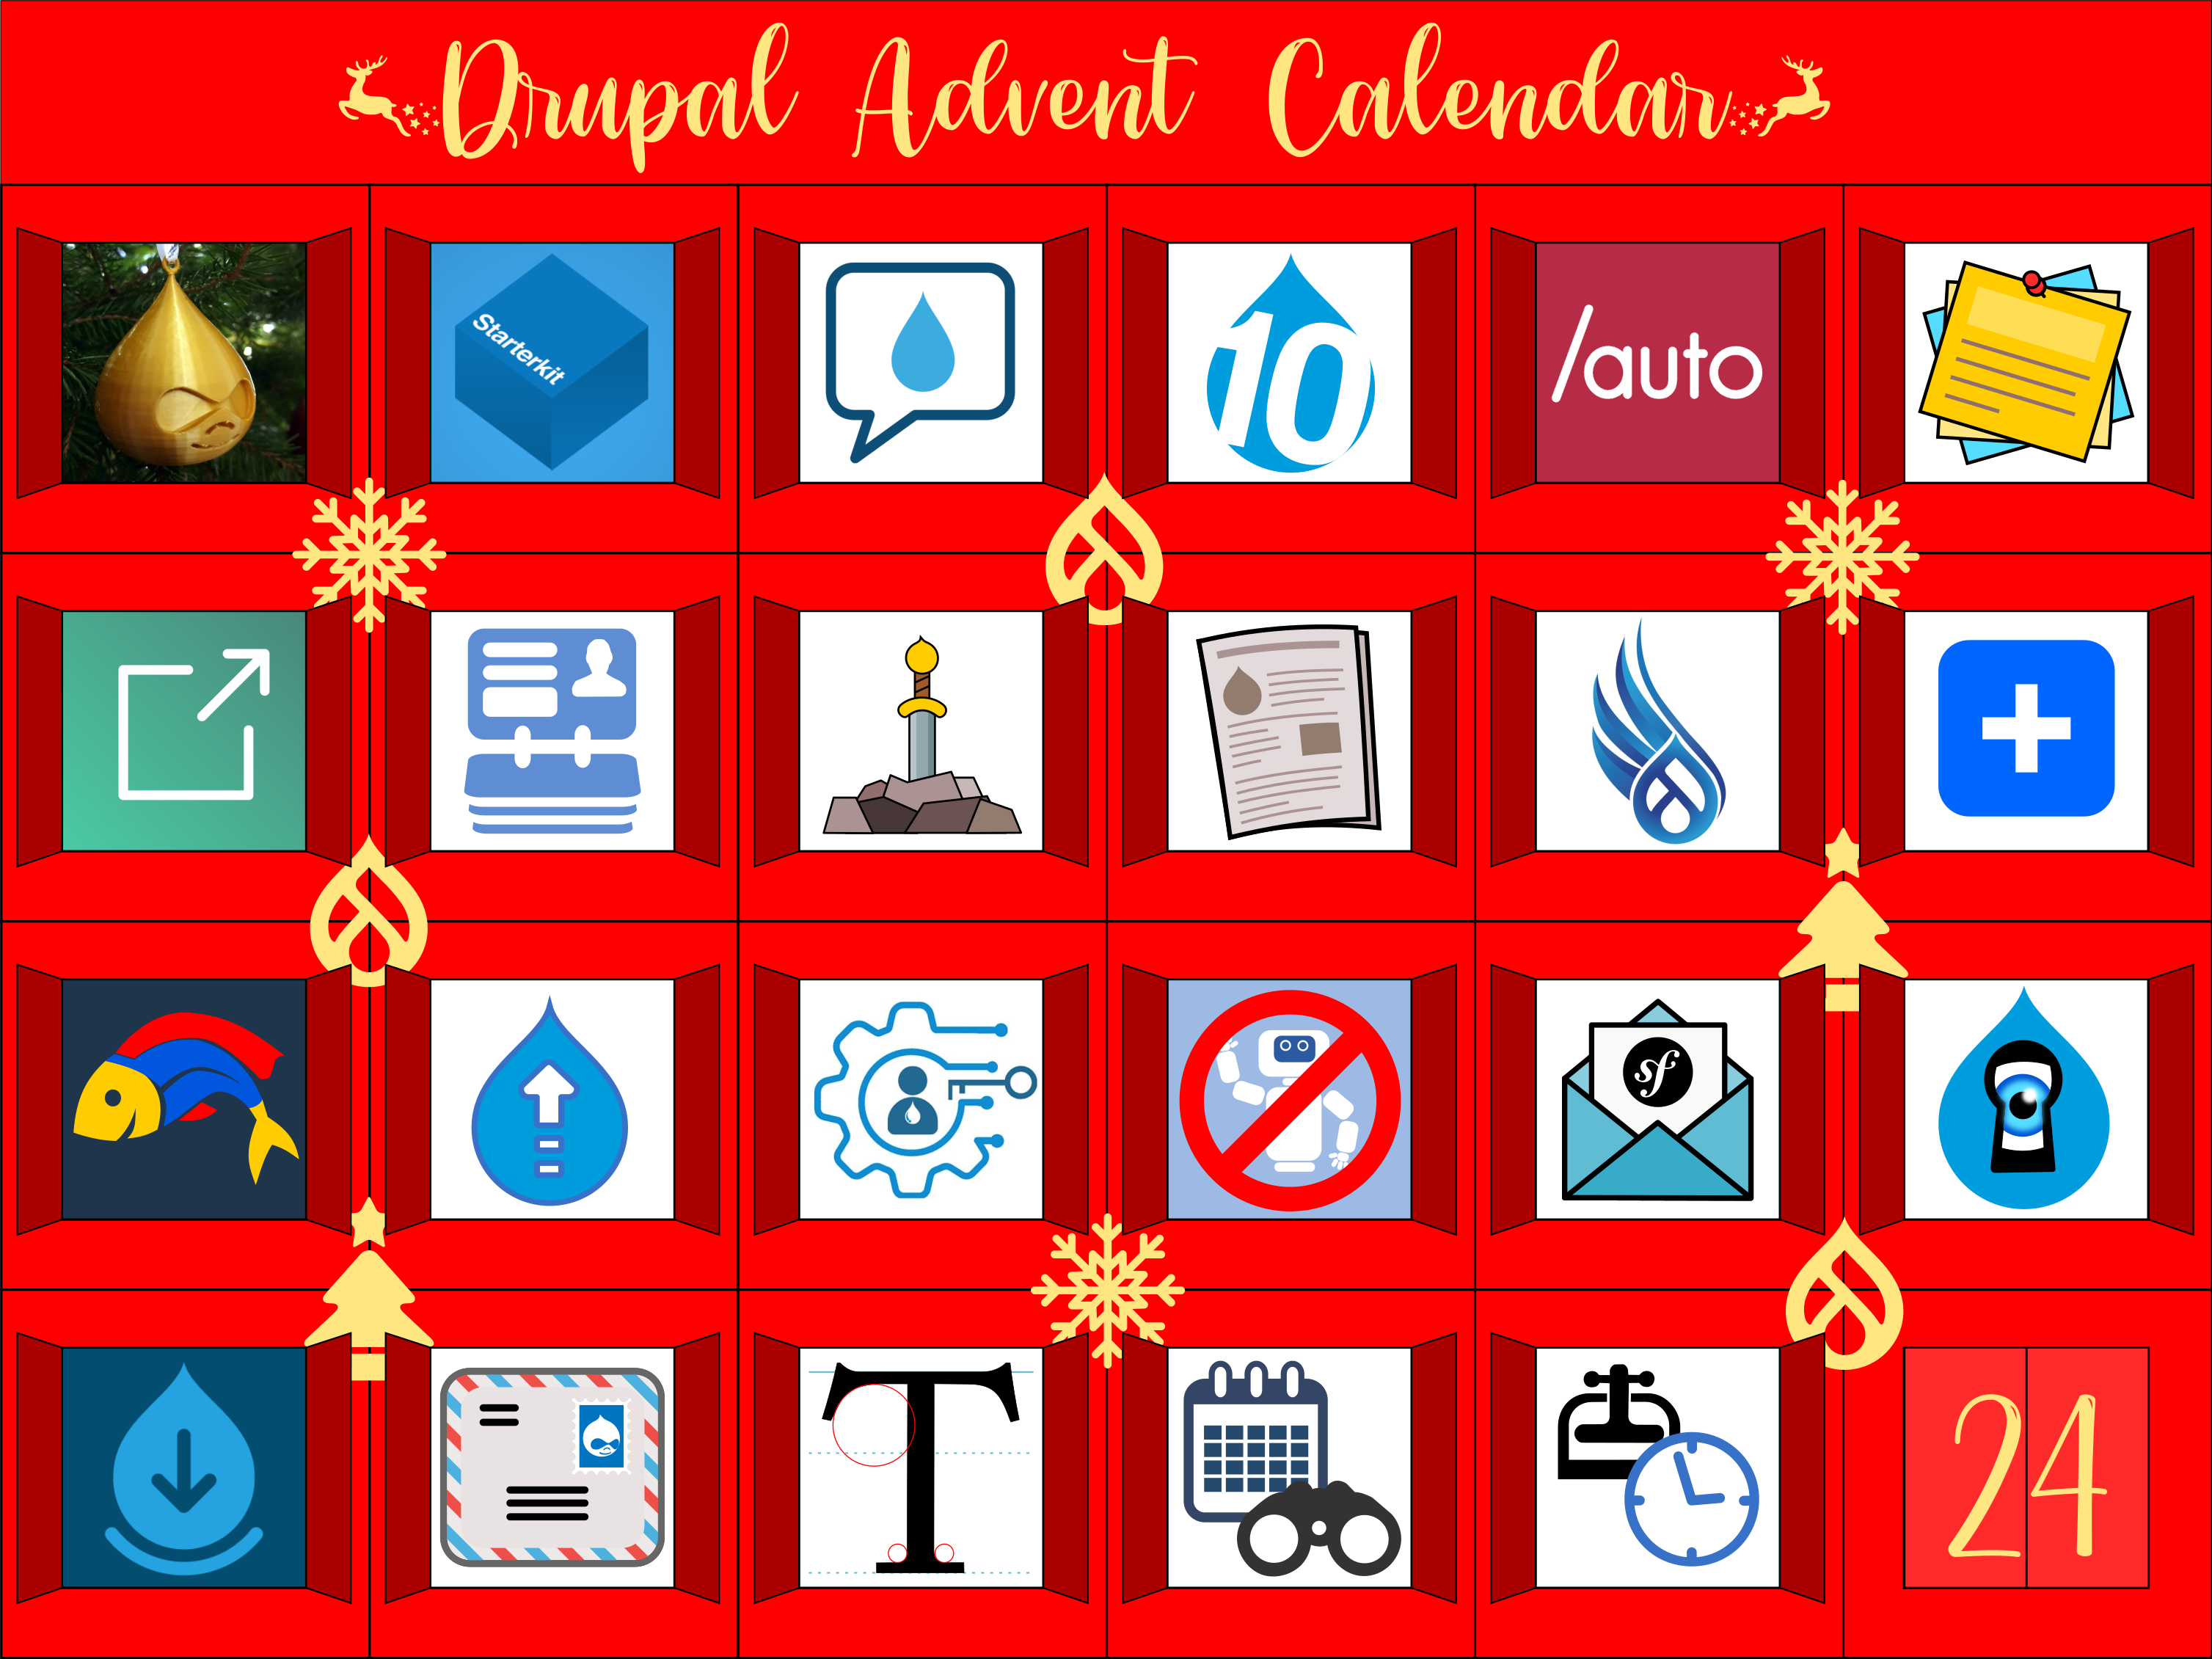 Advent Calendar with door 23 open, containing the StarterKit logo